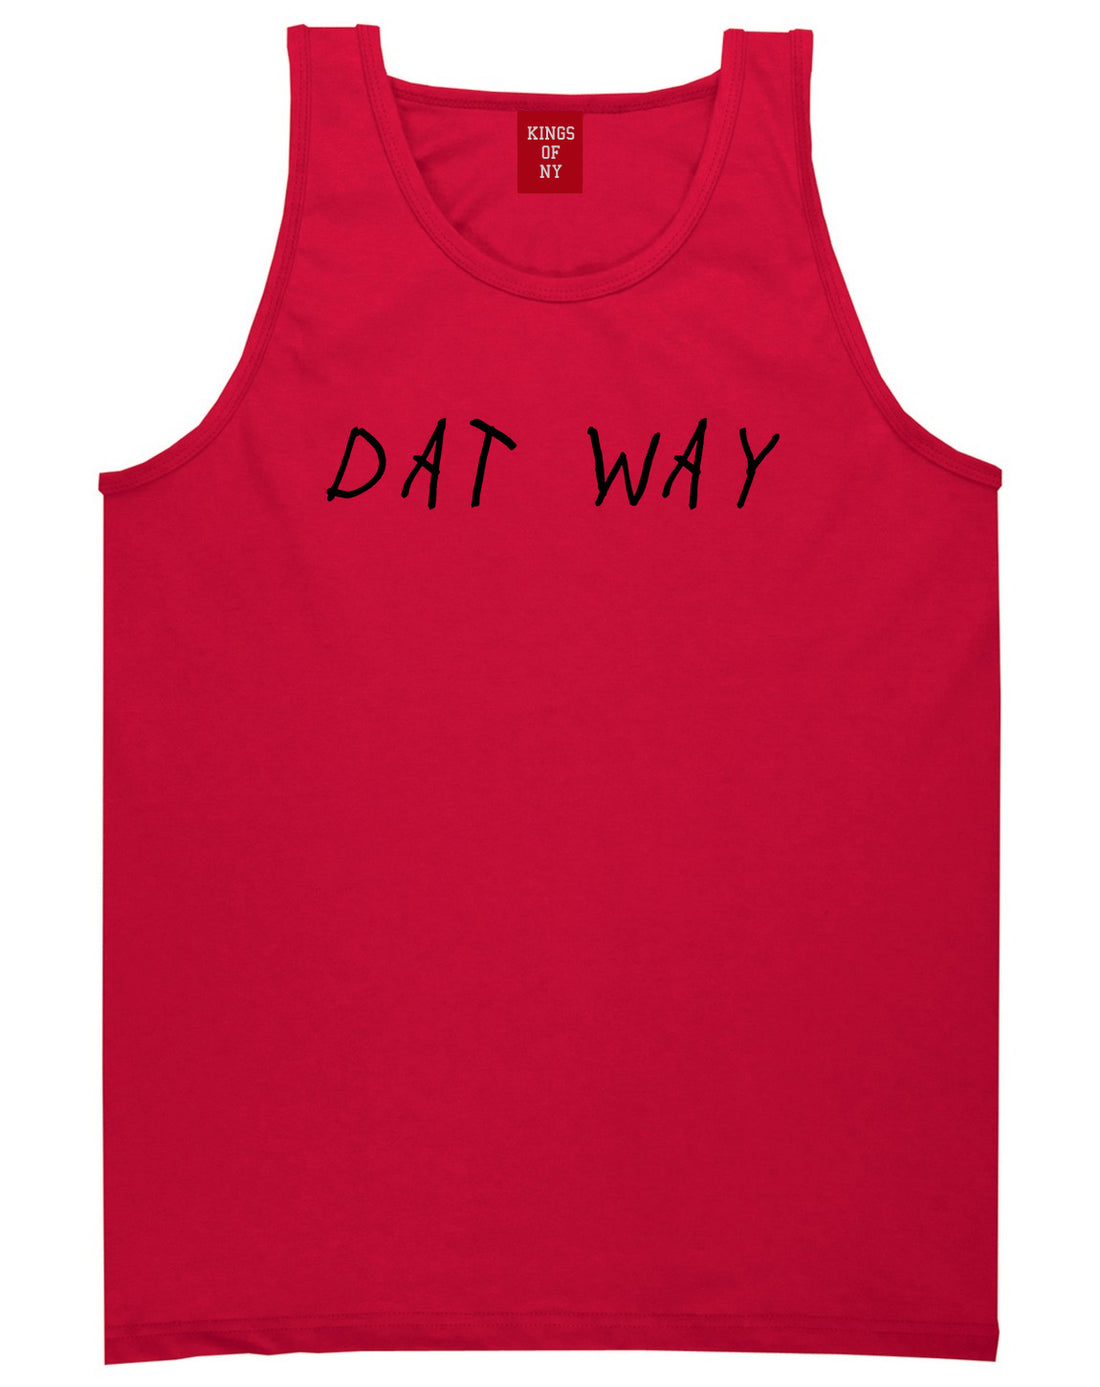 Dat_Way_Font Mens Red Tank Top Shirt by Kings Of NY